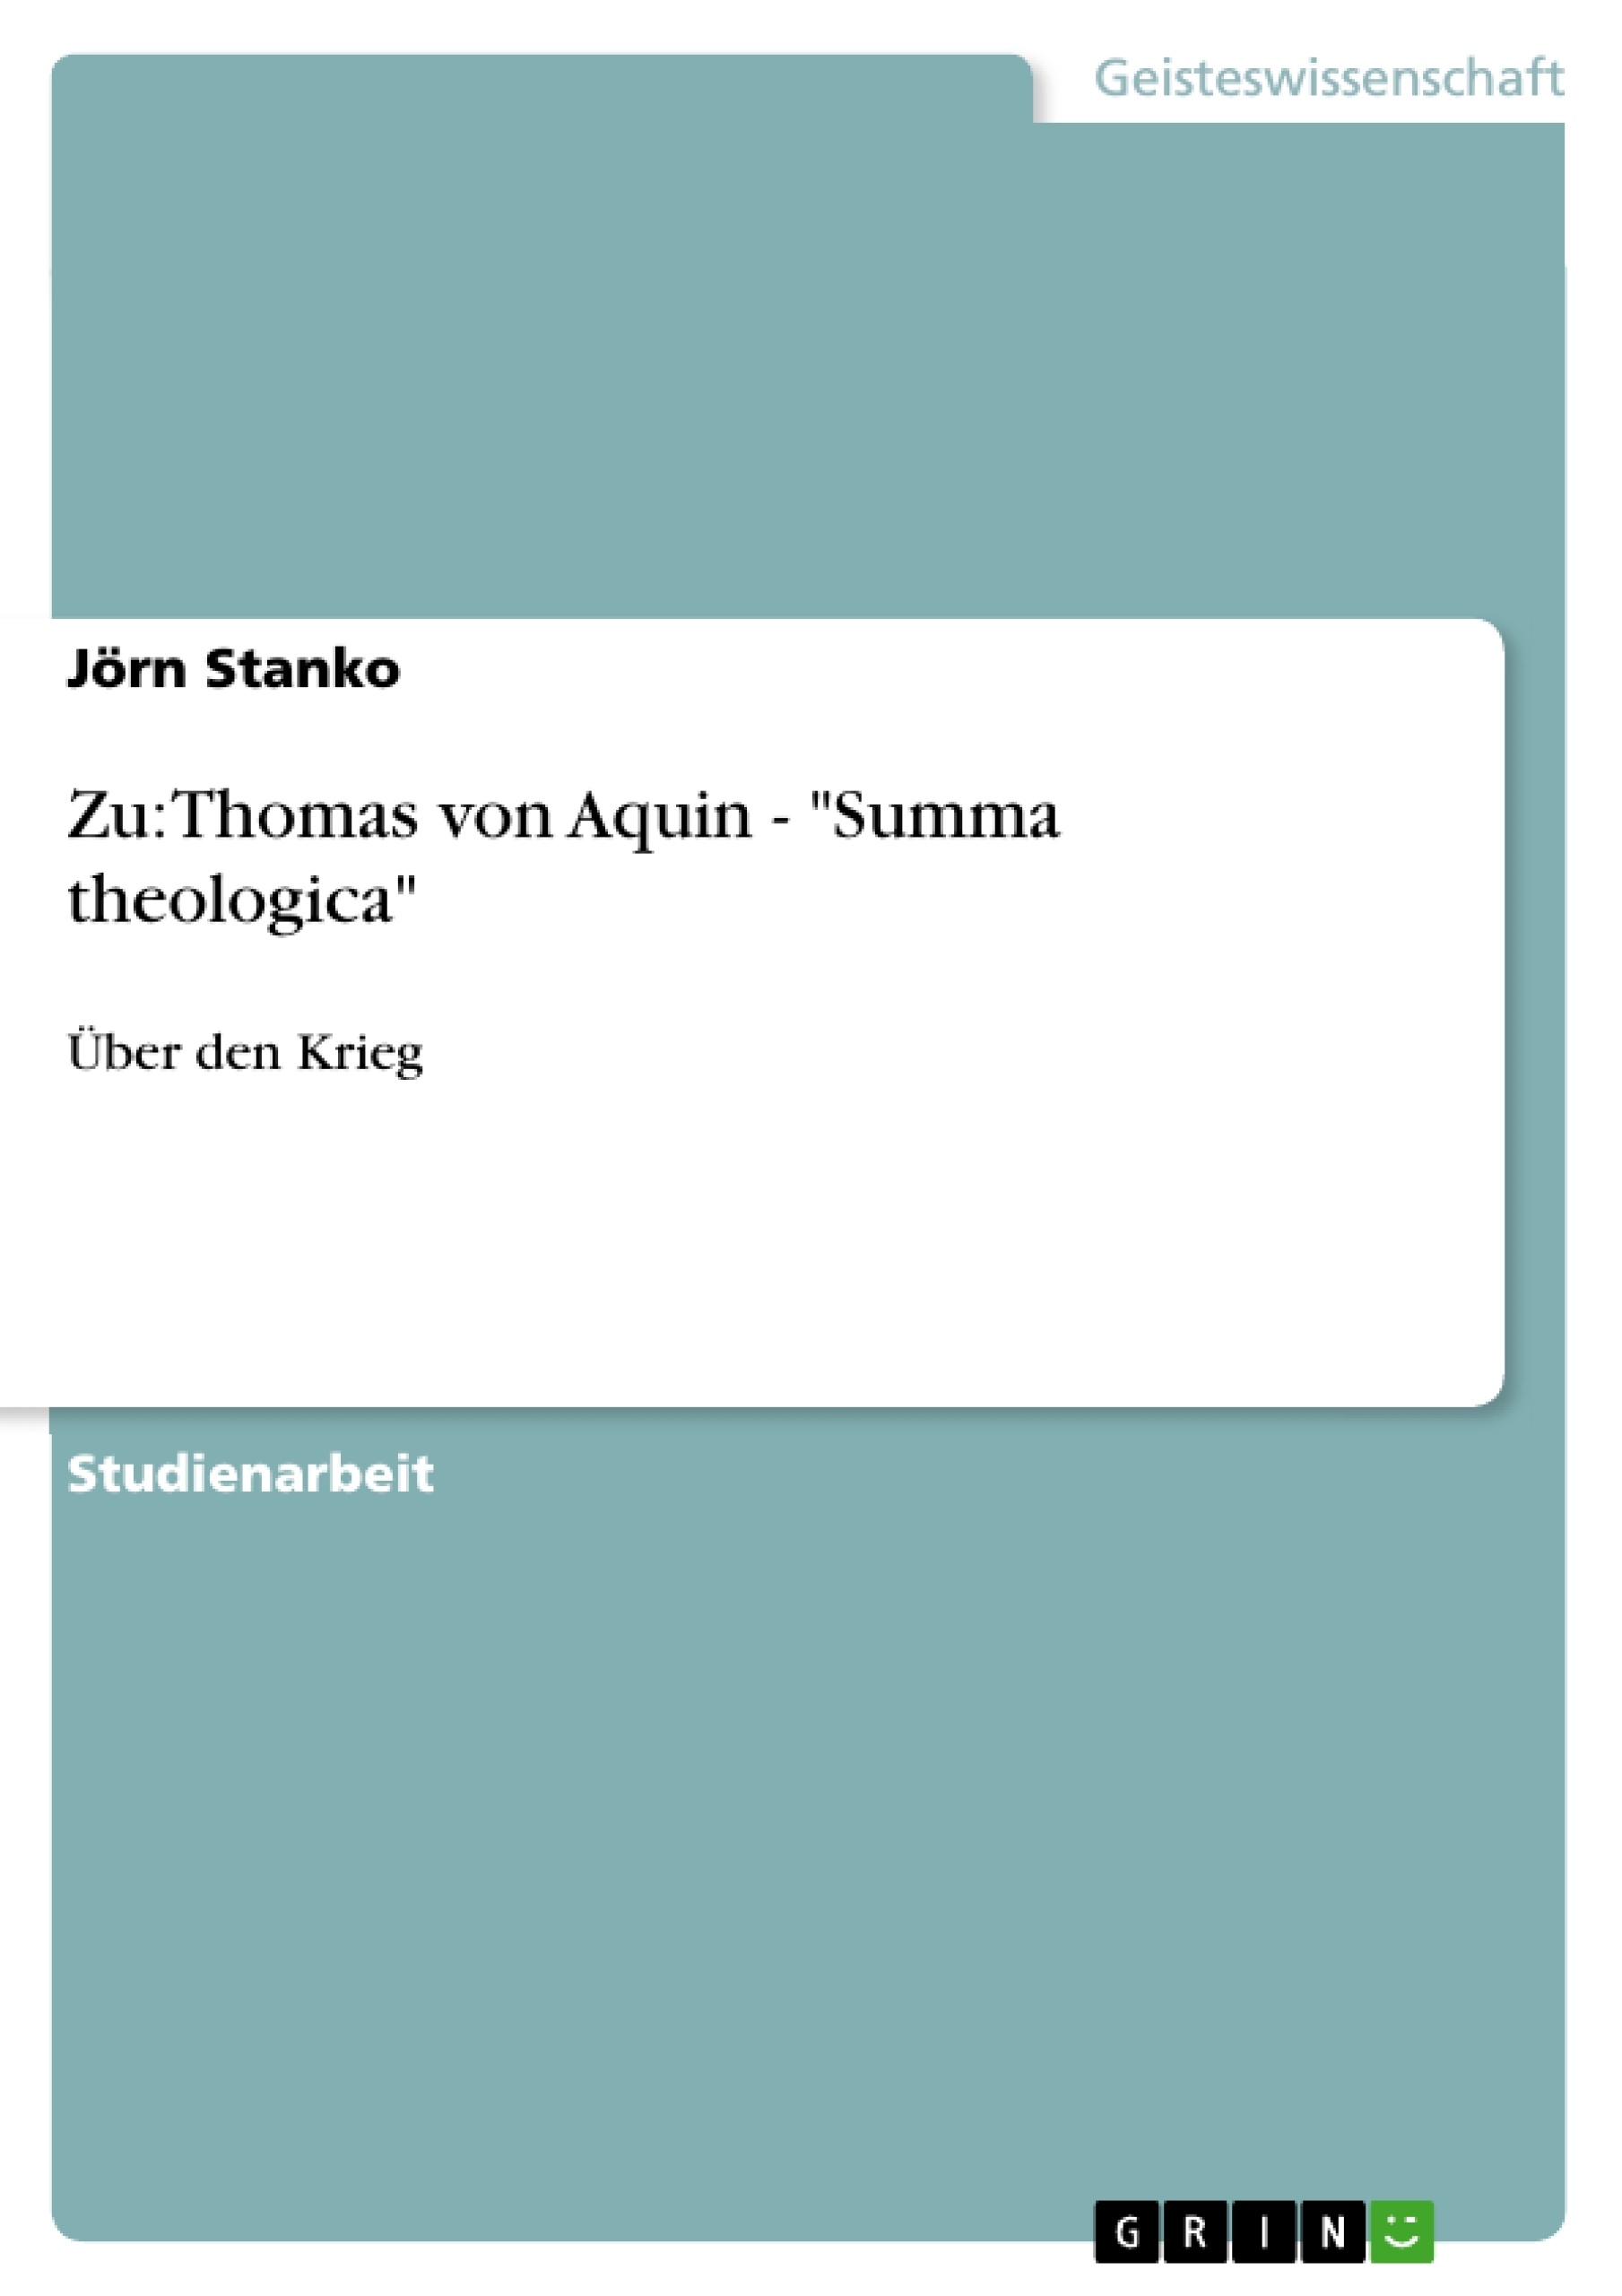 Titre: Zu: Thomas von Aquin - "Summa theologica"